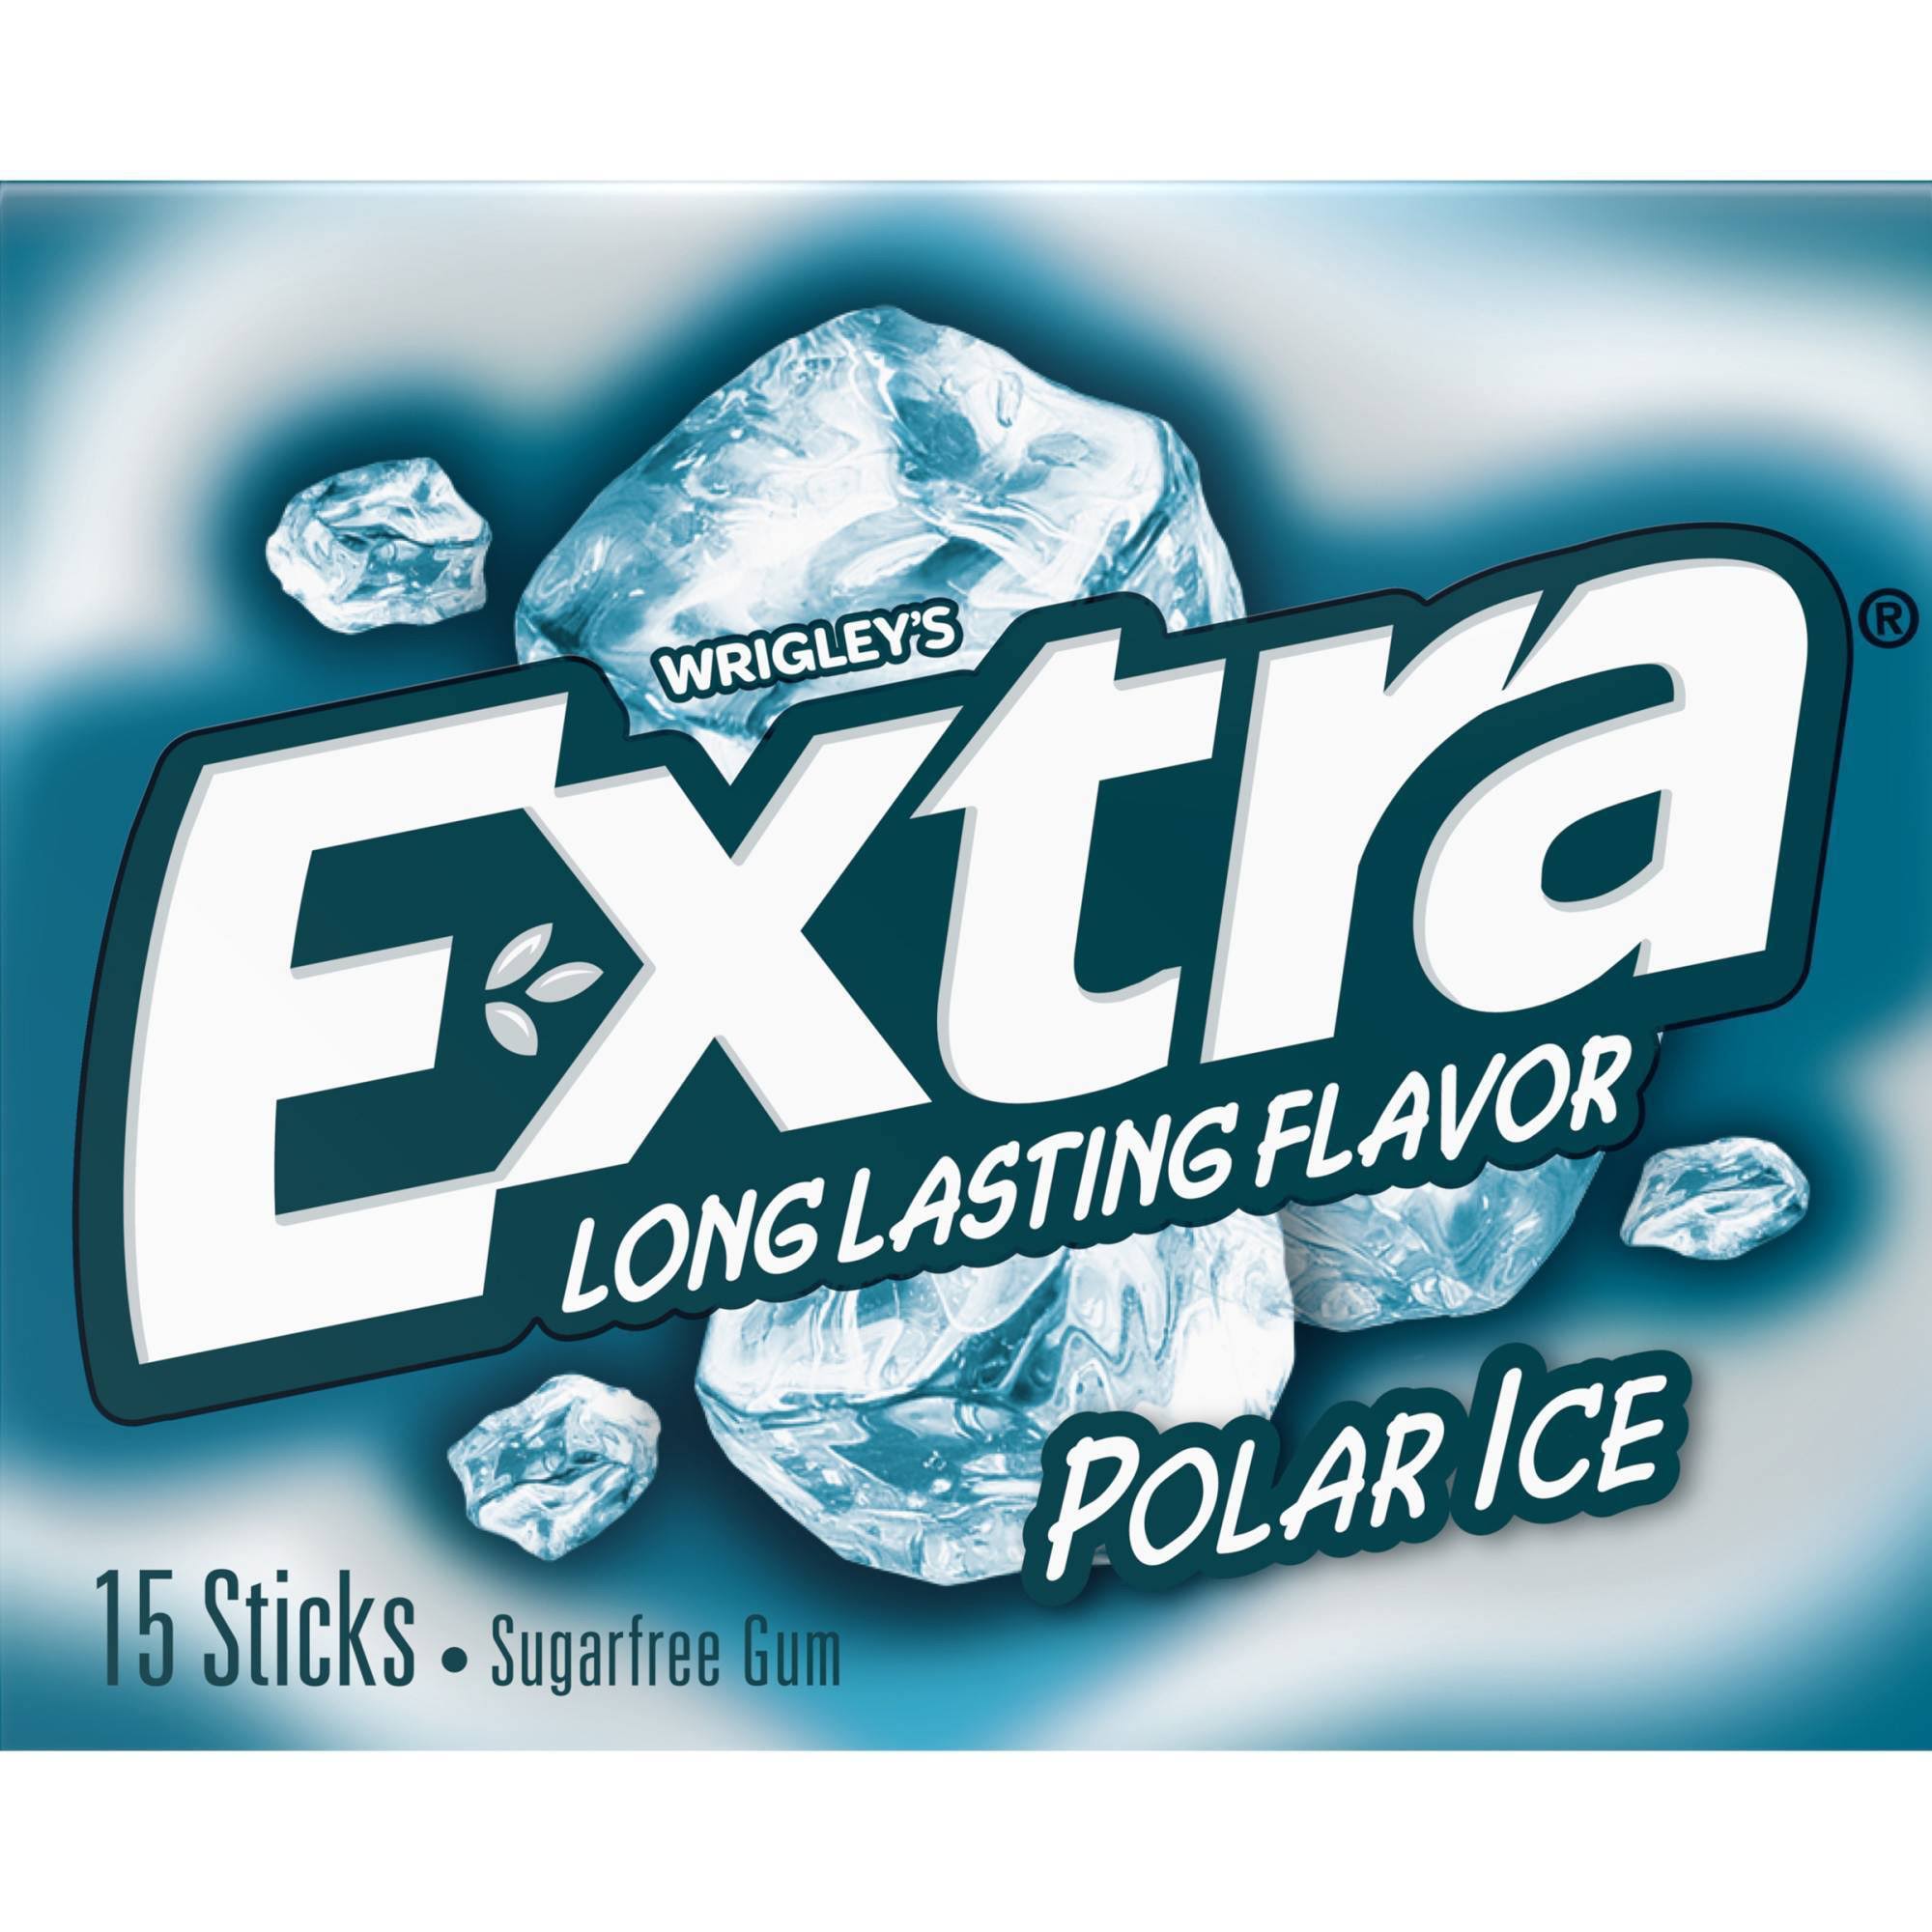 Wrigley's Extra Long Lasting Flavor Sugar Free Gum - Polar Ice